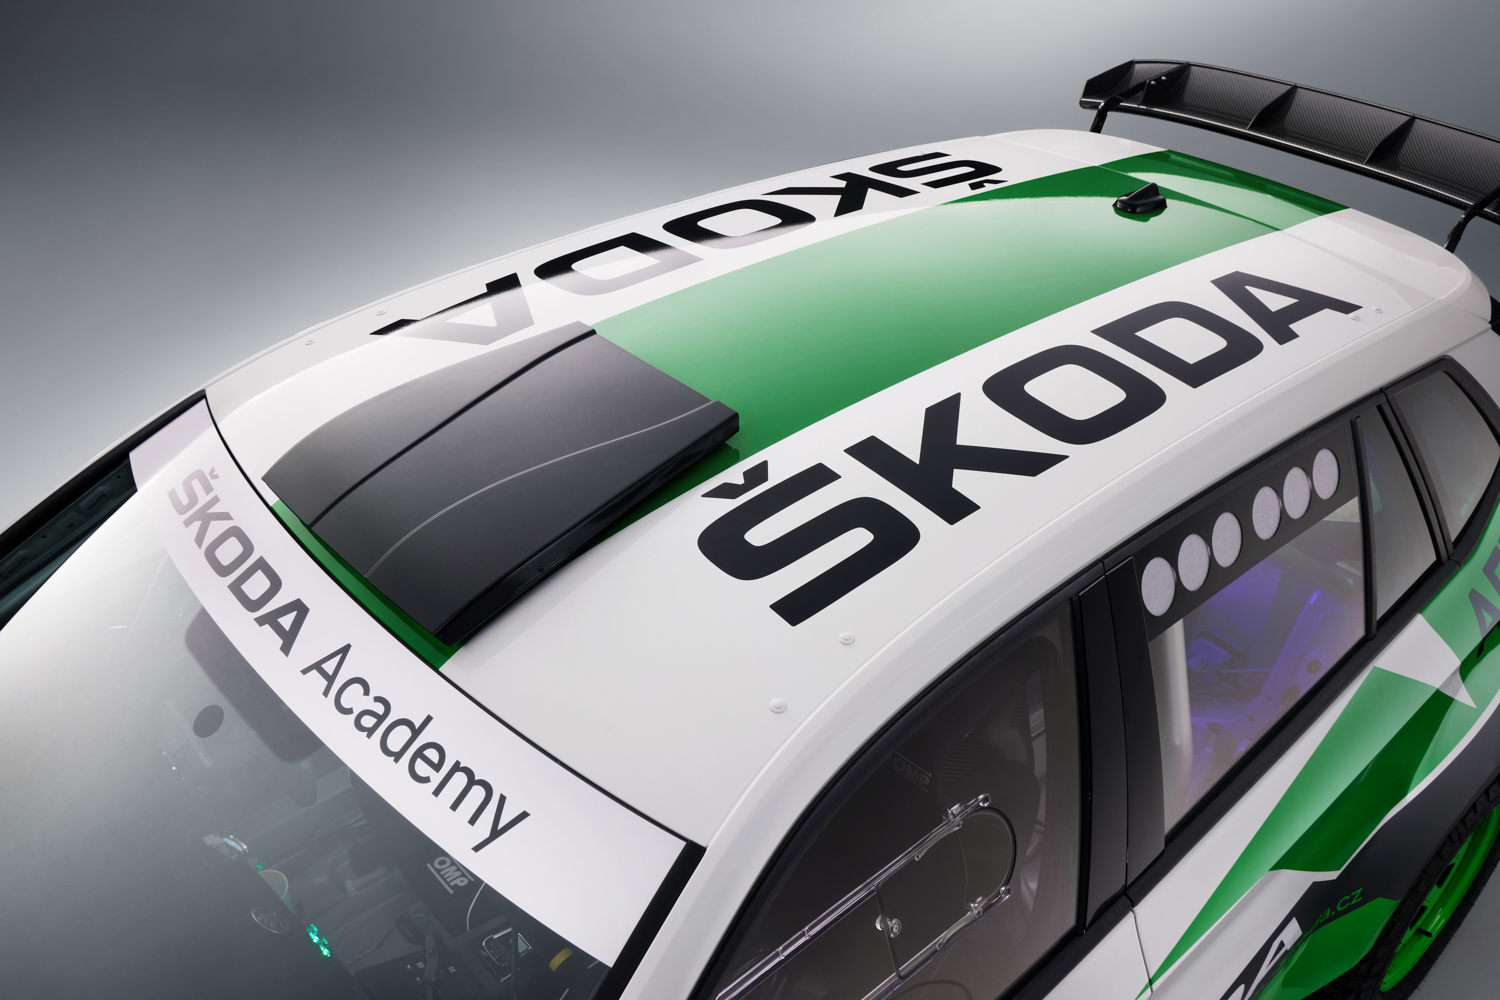 Skoda Afriq is the latest Student Concept car